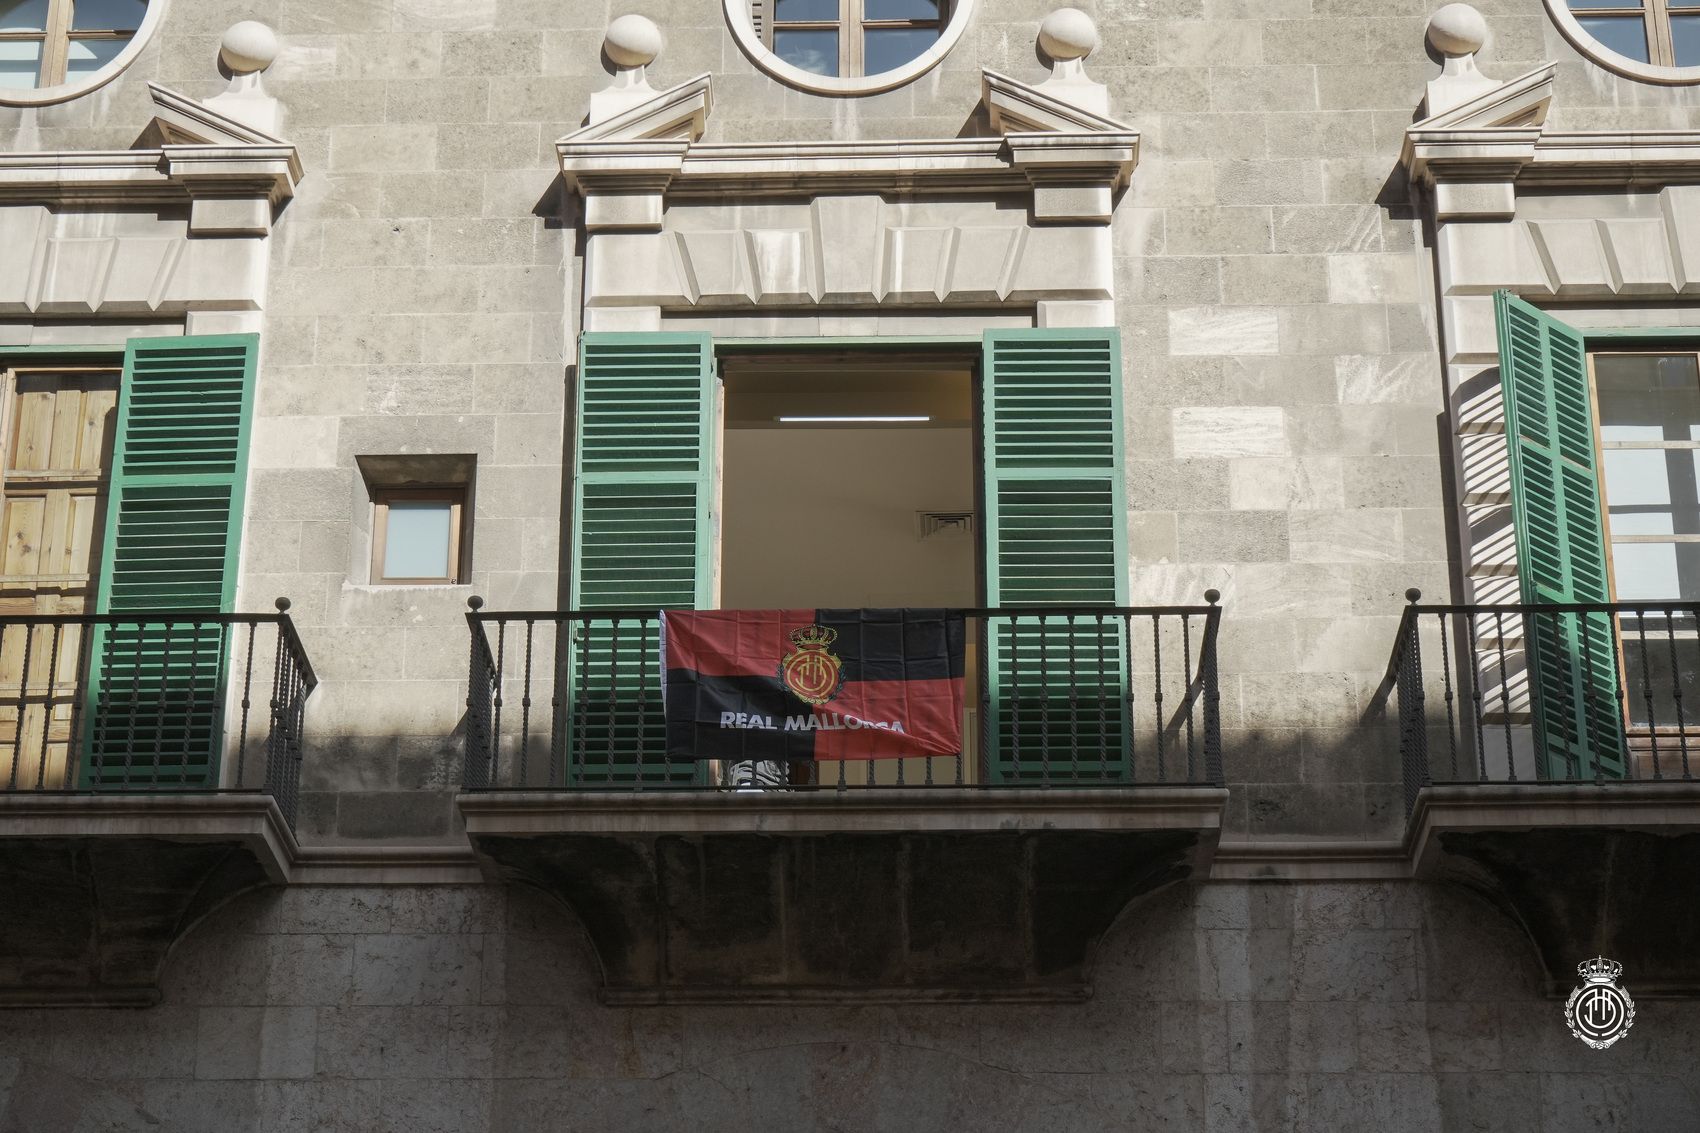 Palma, de rojo y negro con la iniciativa del RCD Mallorca: #MallorcaDeBandera